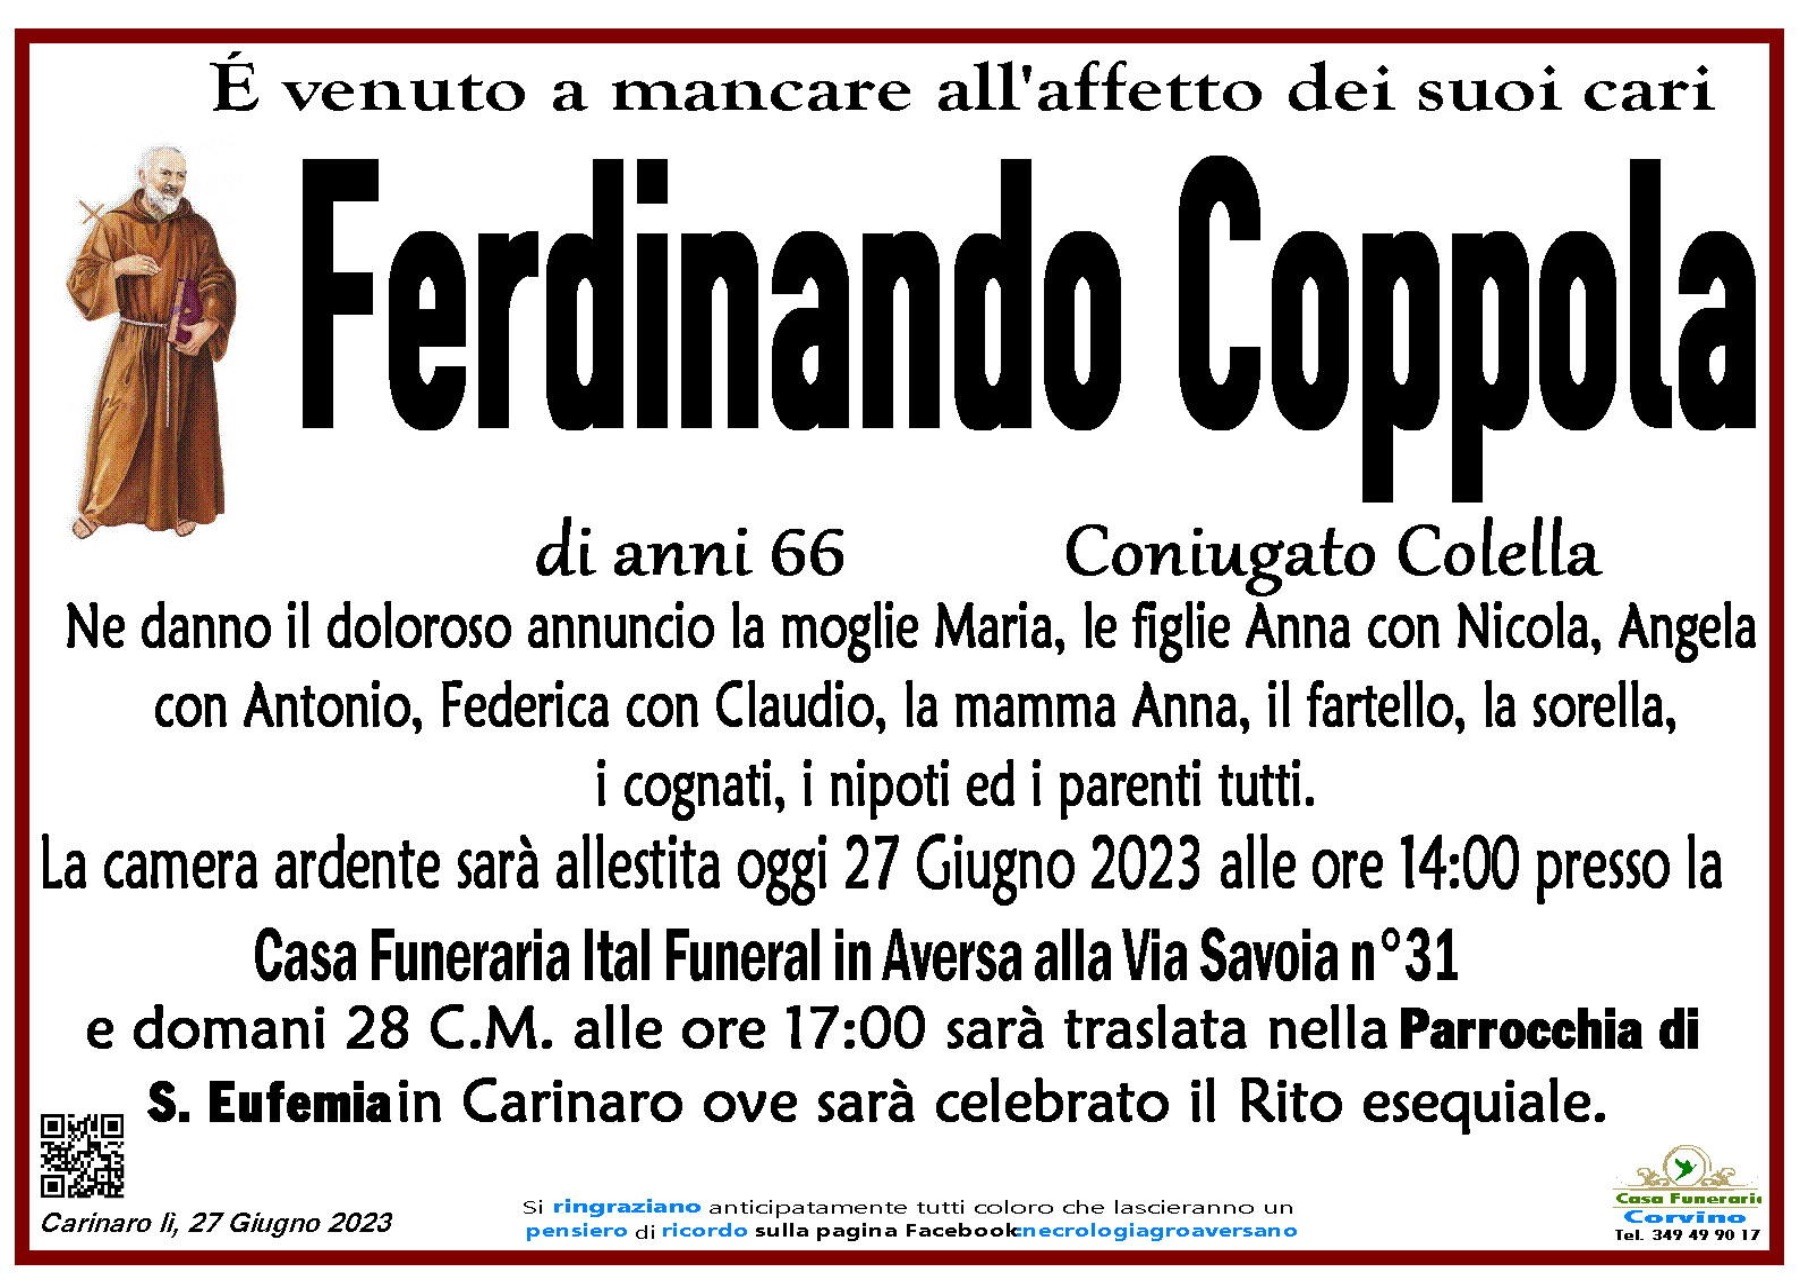 Ferdinando Coppola